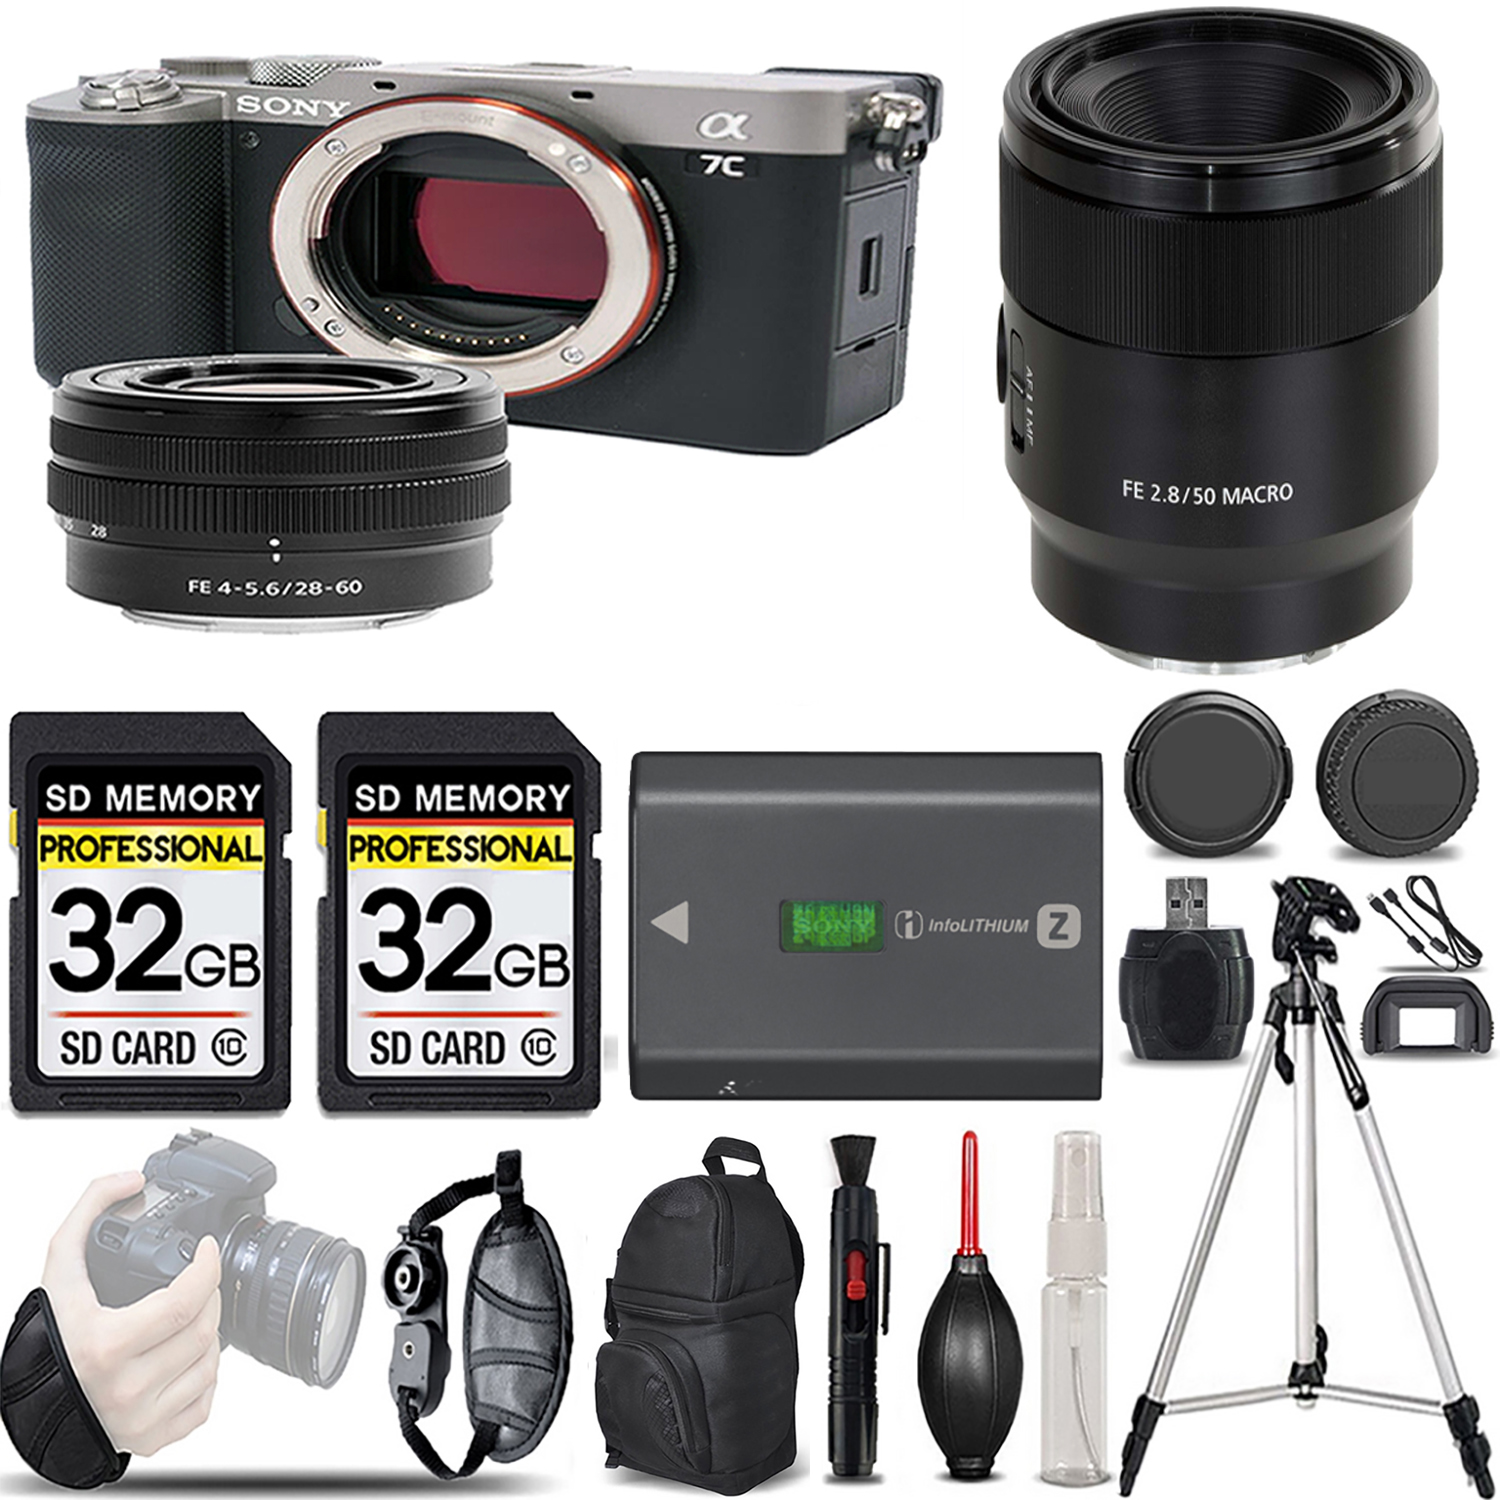 Alpha a7C Camera (Silver) + 28-60mm Lens + 50mm f/2.8 Macro Lens - LOADED KIT *FREE SHIPPING*